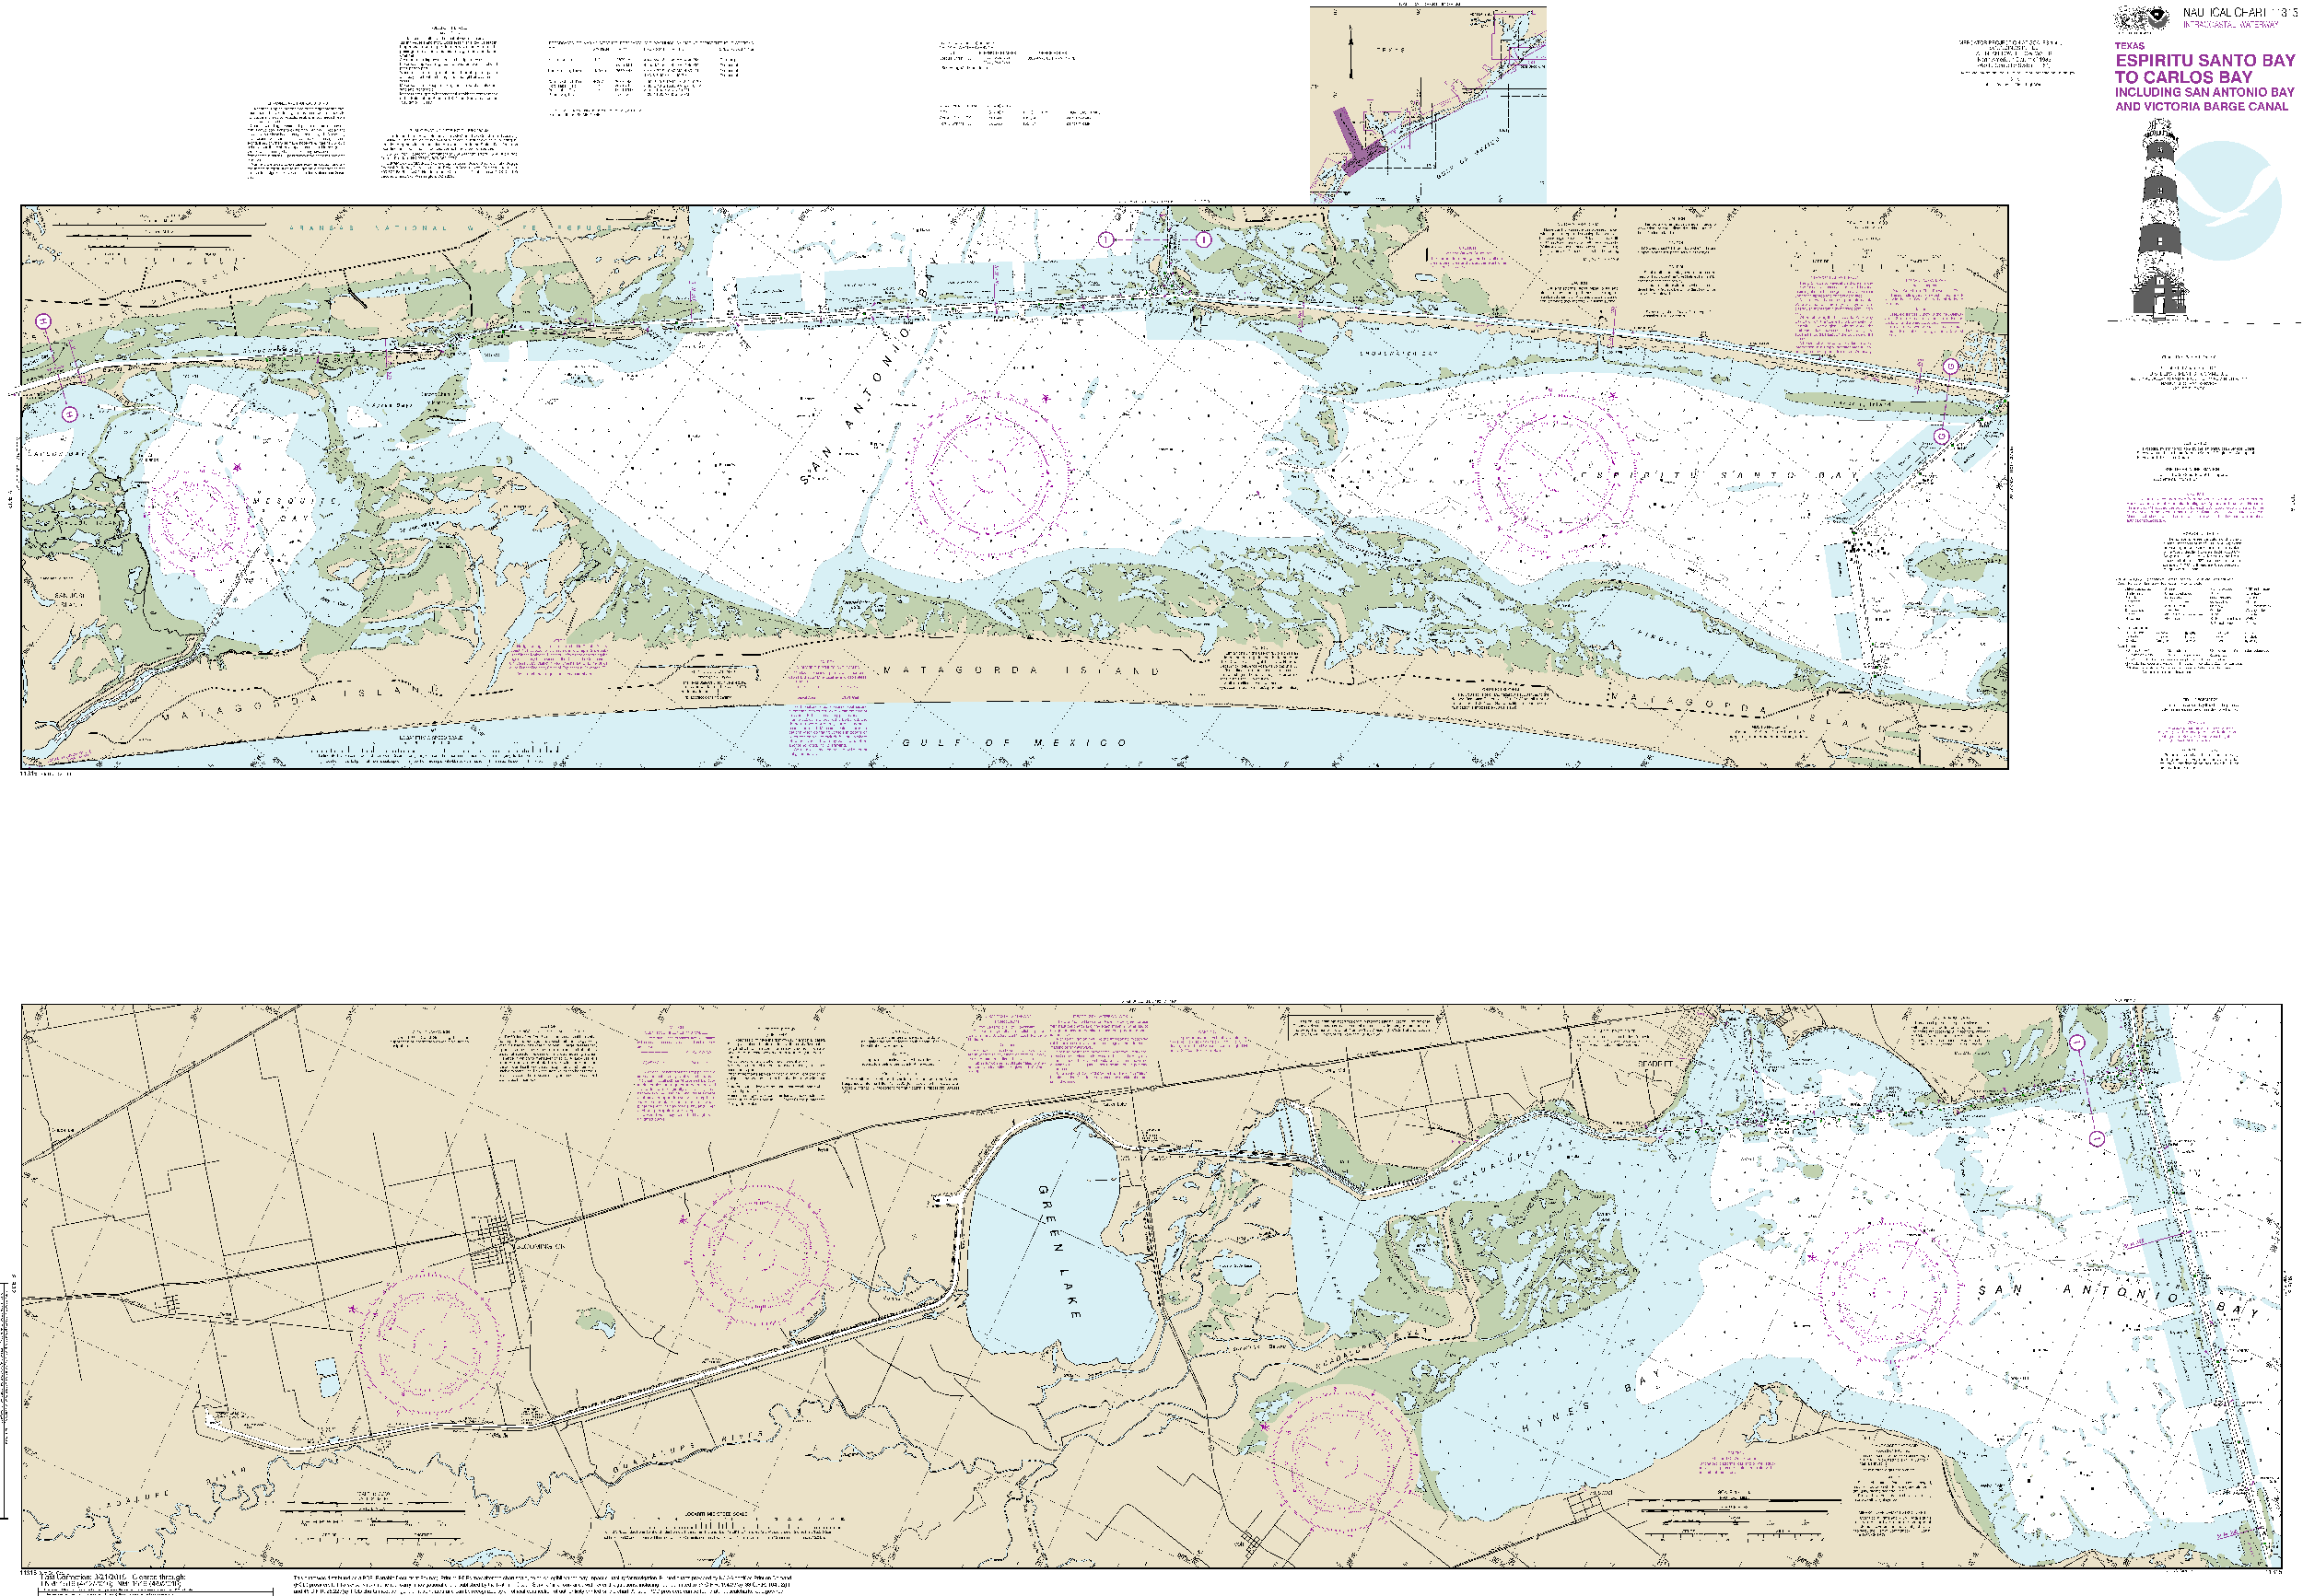 NOAA Nautical Chart 11315: Intracoastal Waterway Espiritu Santo Bay to Carlos Bay including San Antonio Bay and Victoria Barge Canal